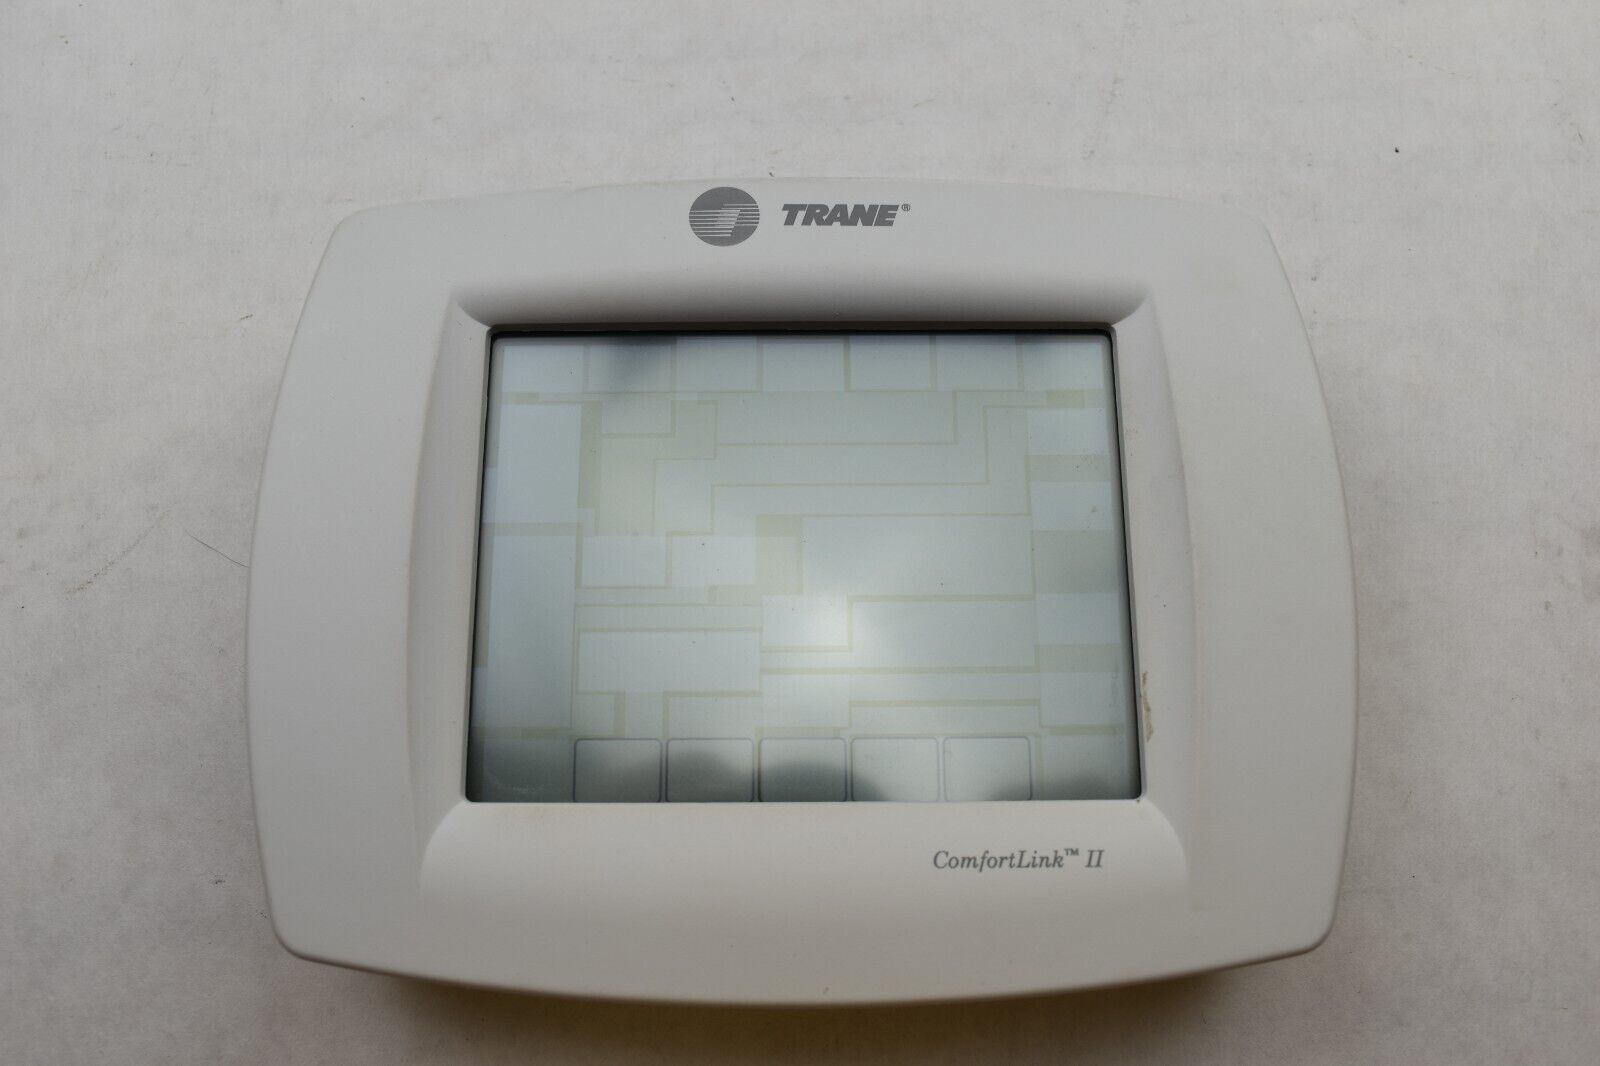  Trane ComfortLink II Thermostat TCONT900AC43UAA Communicating Thermostat